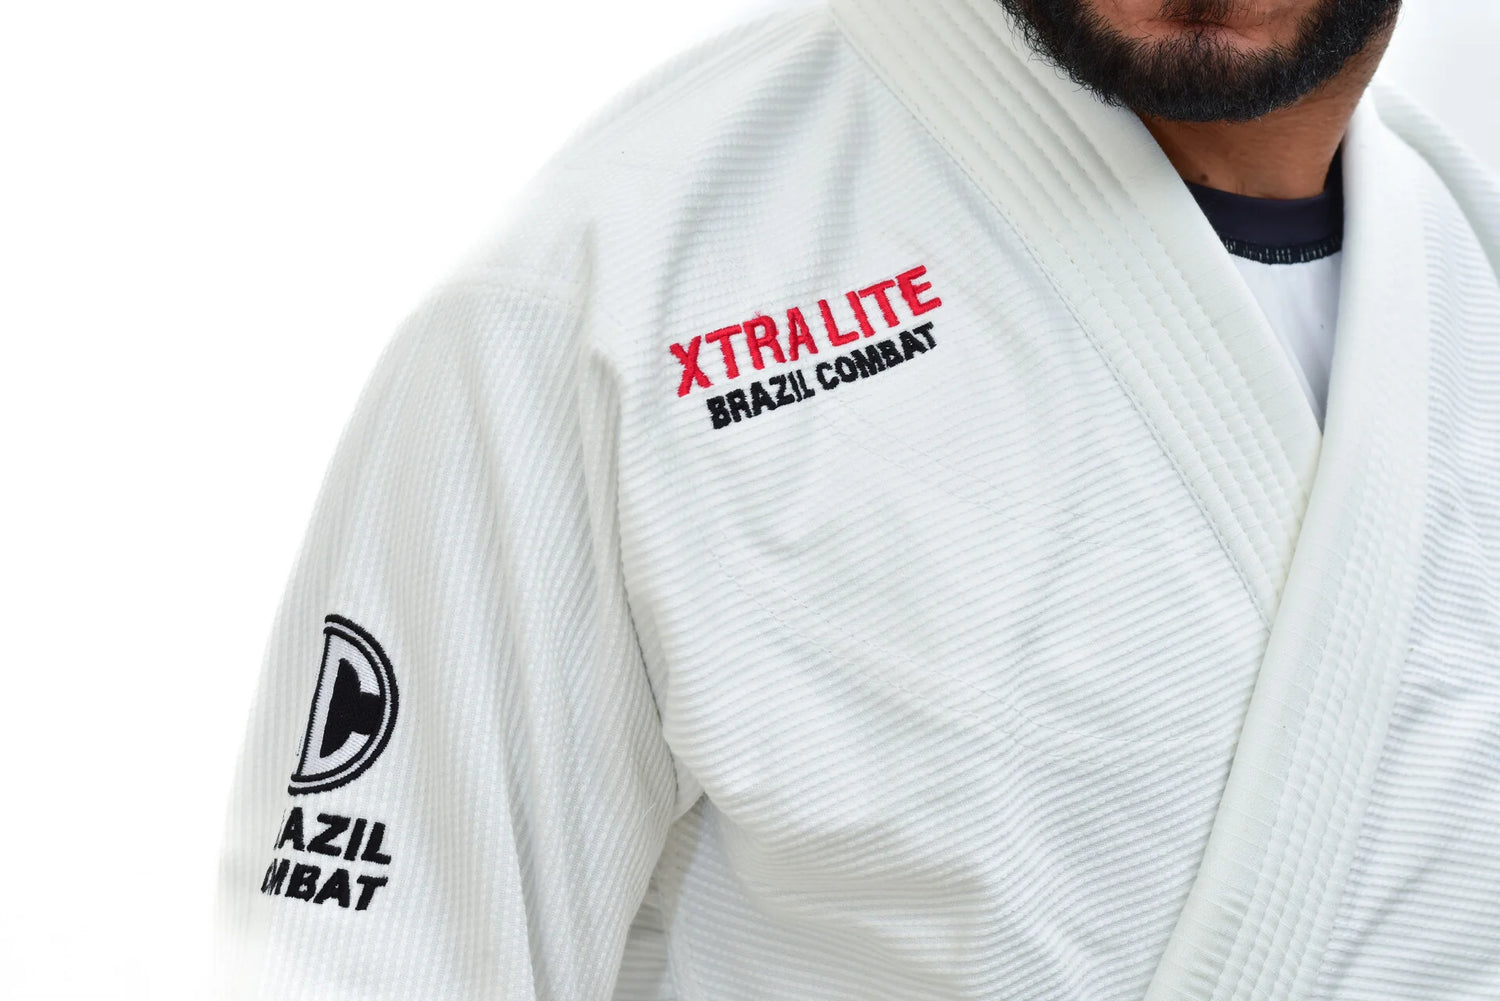 XTRA Lite 2.0 BJJ Kimono by Brazil Combat - IBJJF Certified - WHITE